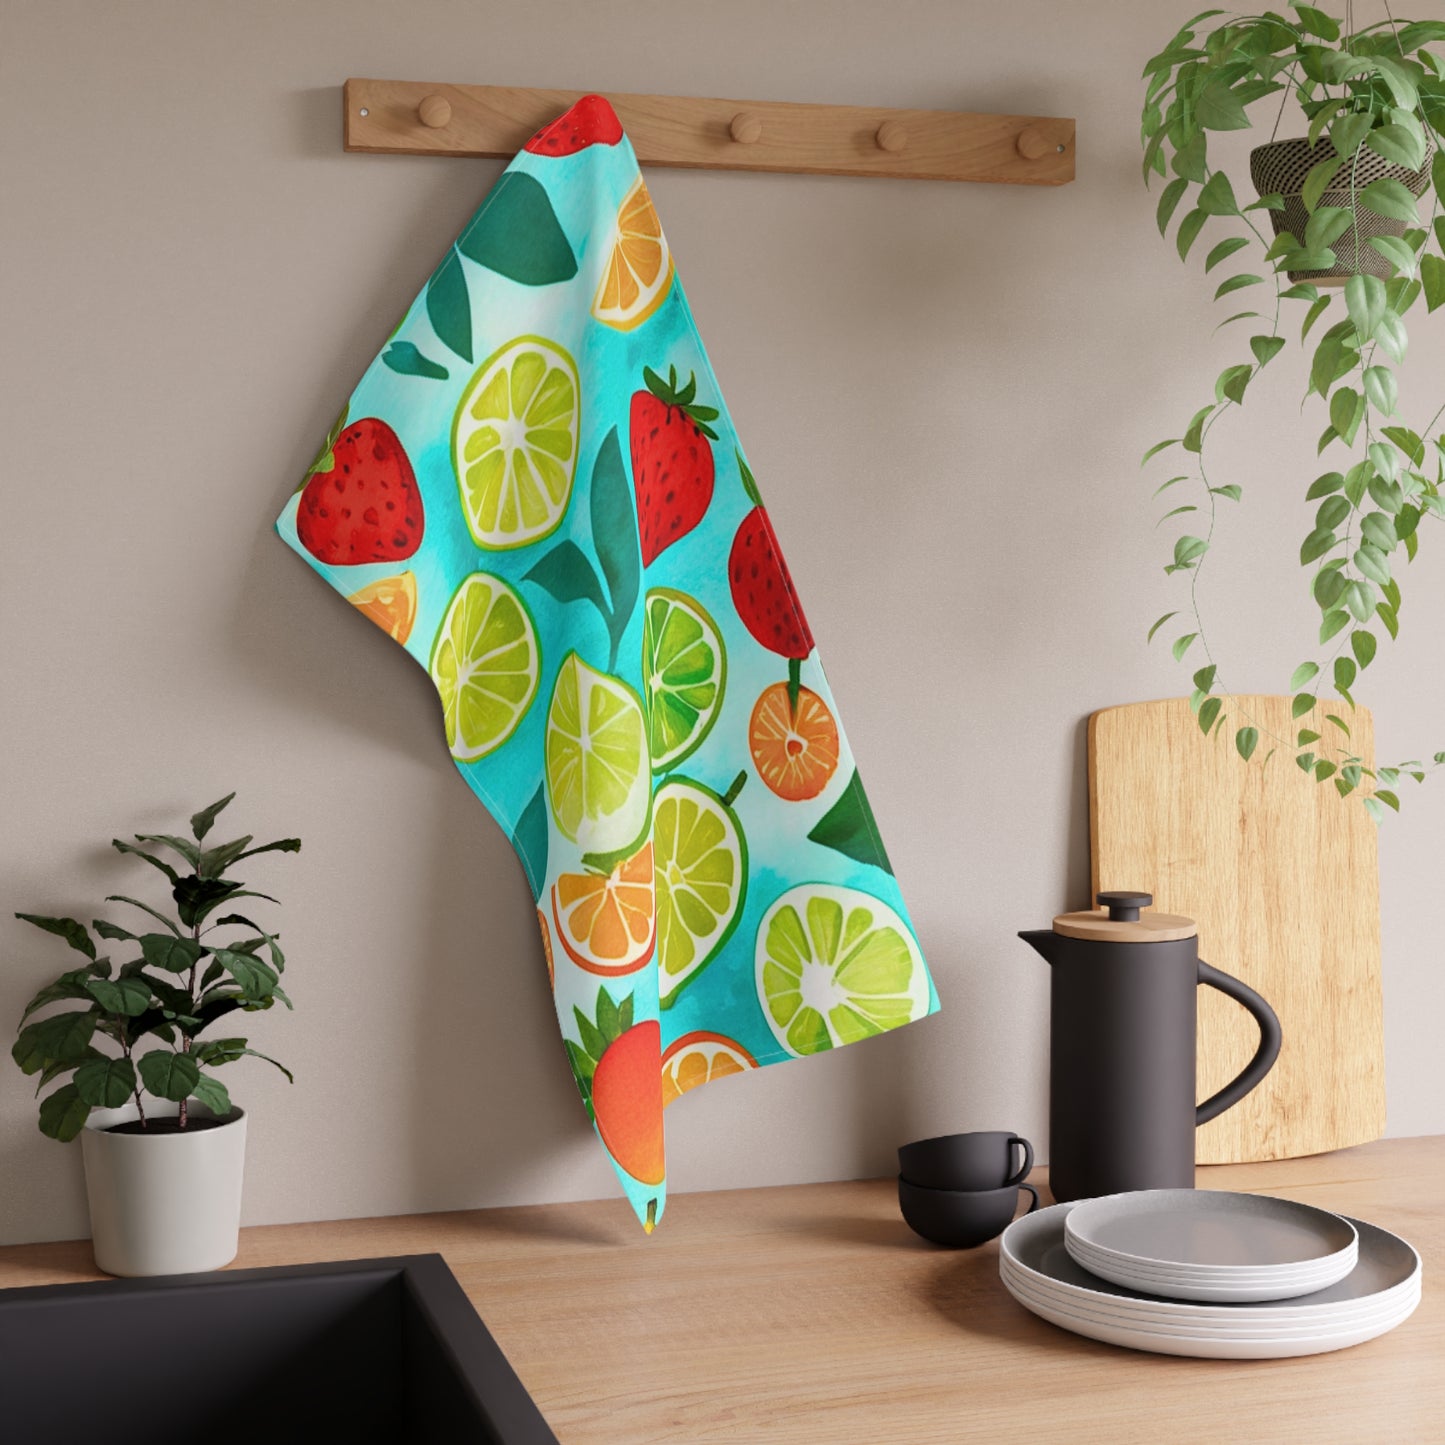 Summer Recipes Watercolor Strawberries Limes Plums Oranges Turquoise Midcentury Modern Illustration Decorative Kitchen Tea Towel/Bar Towel